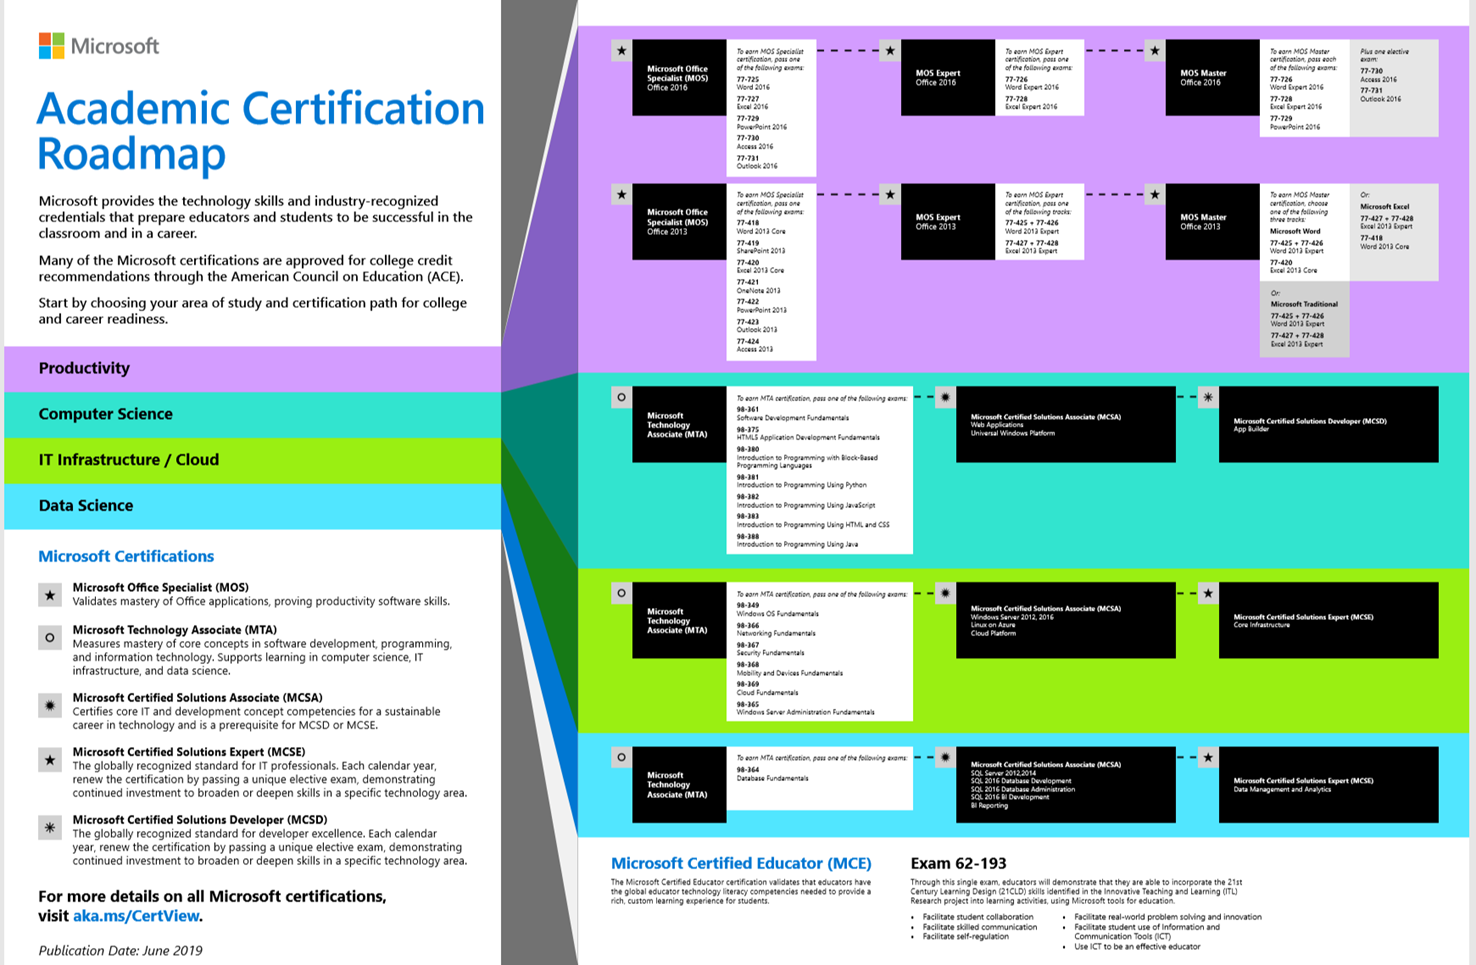 Certification Chart